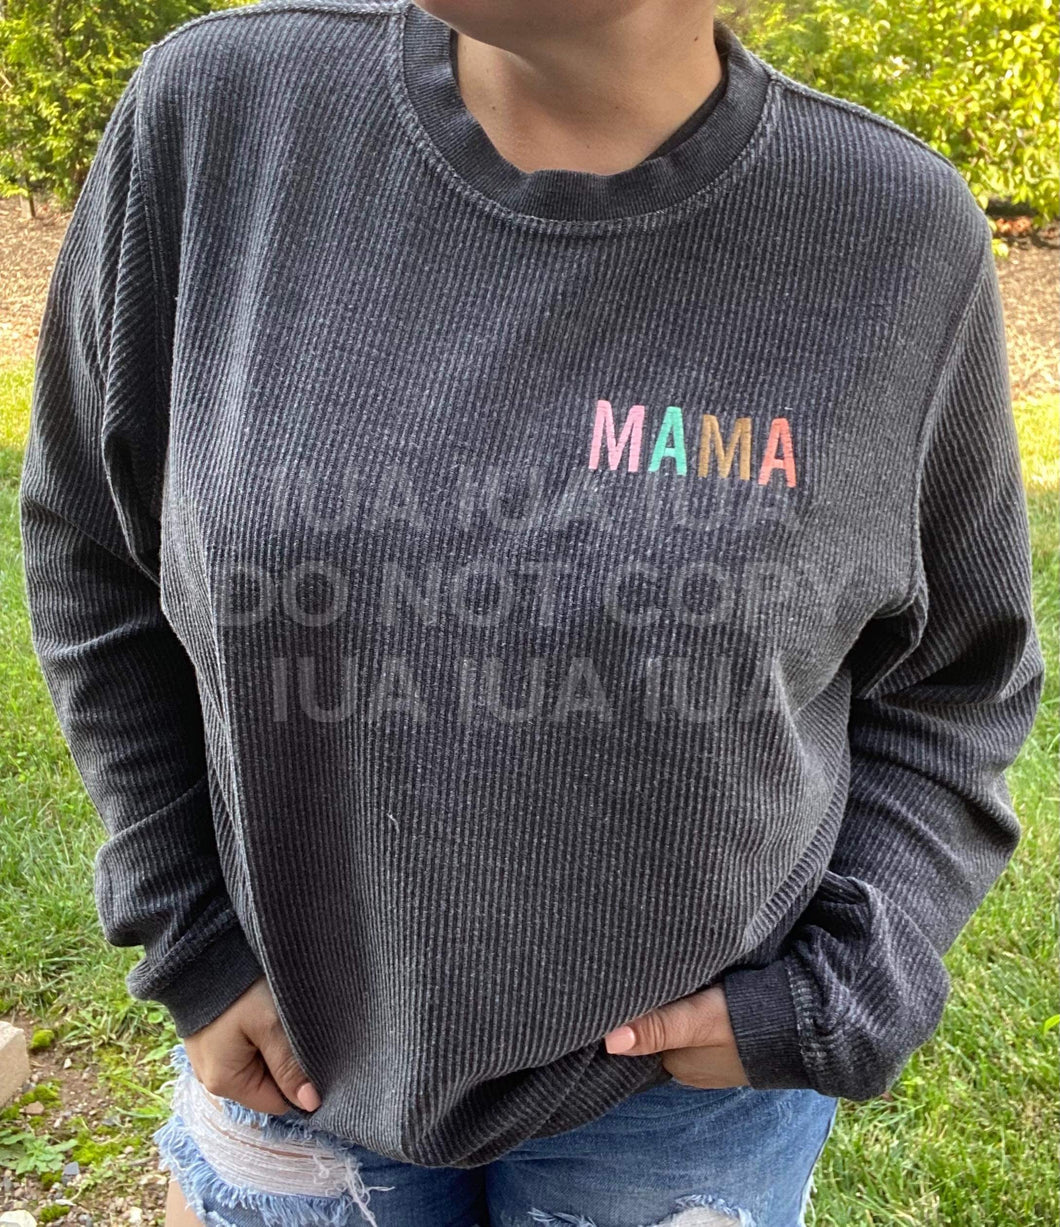 Mama - Corded Sweatshirt